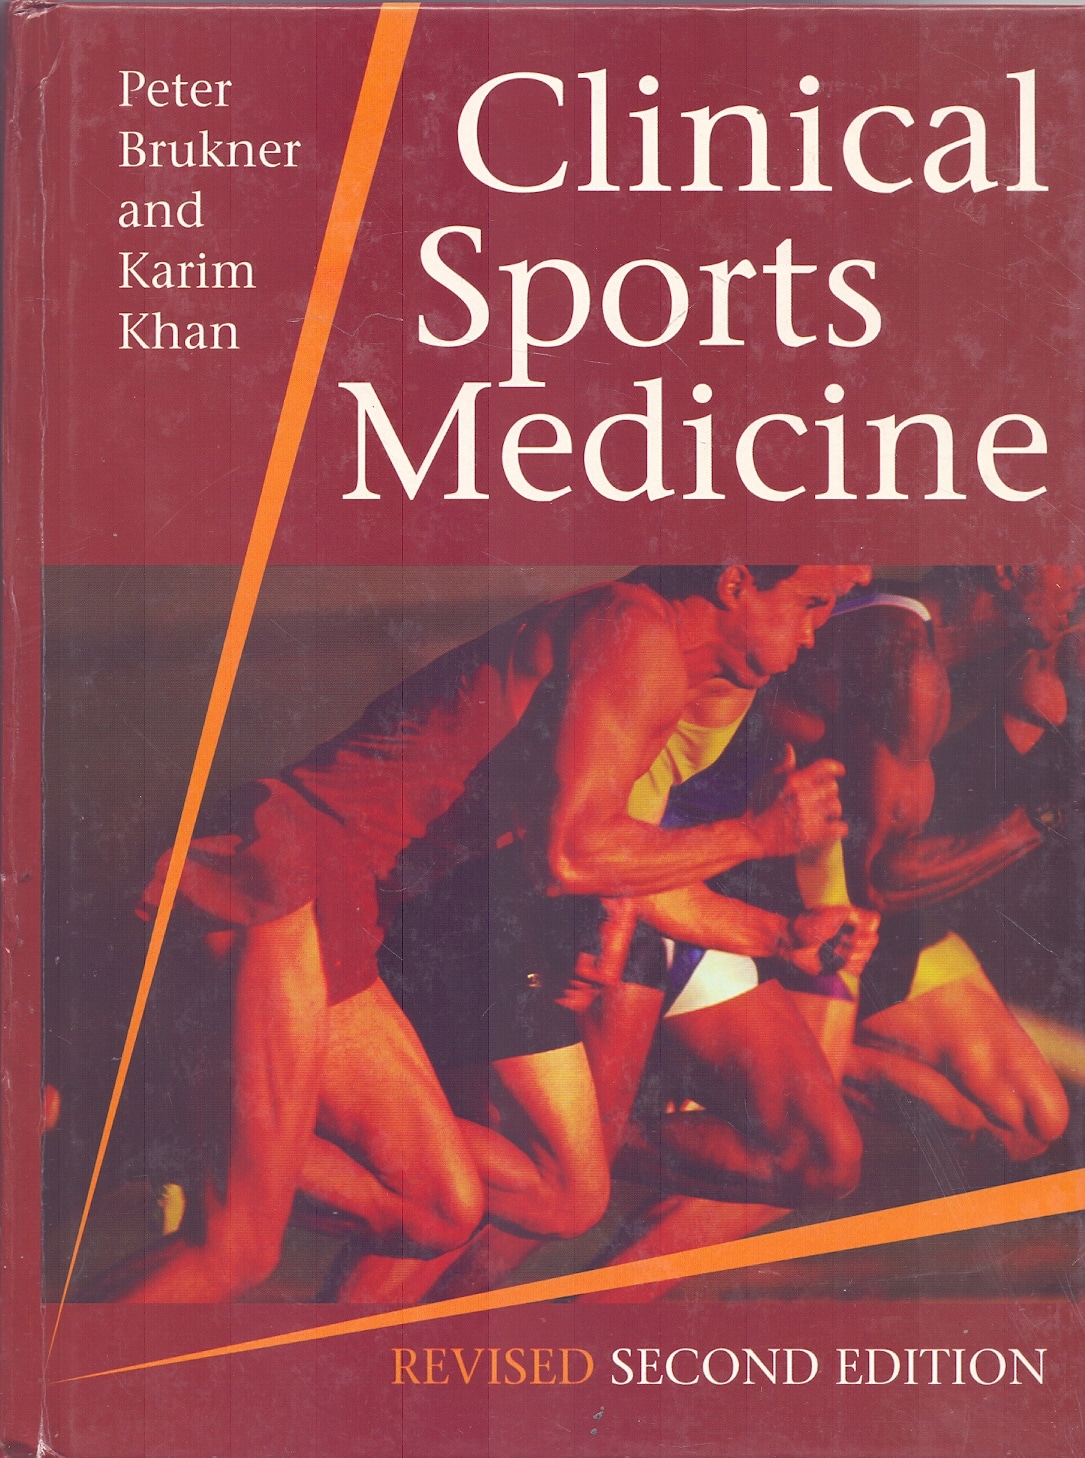 Clinical sports medicine Peter Brukner, Karim Khan